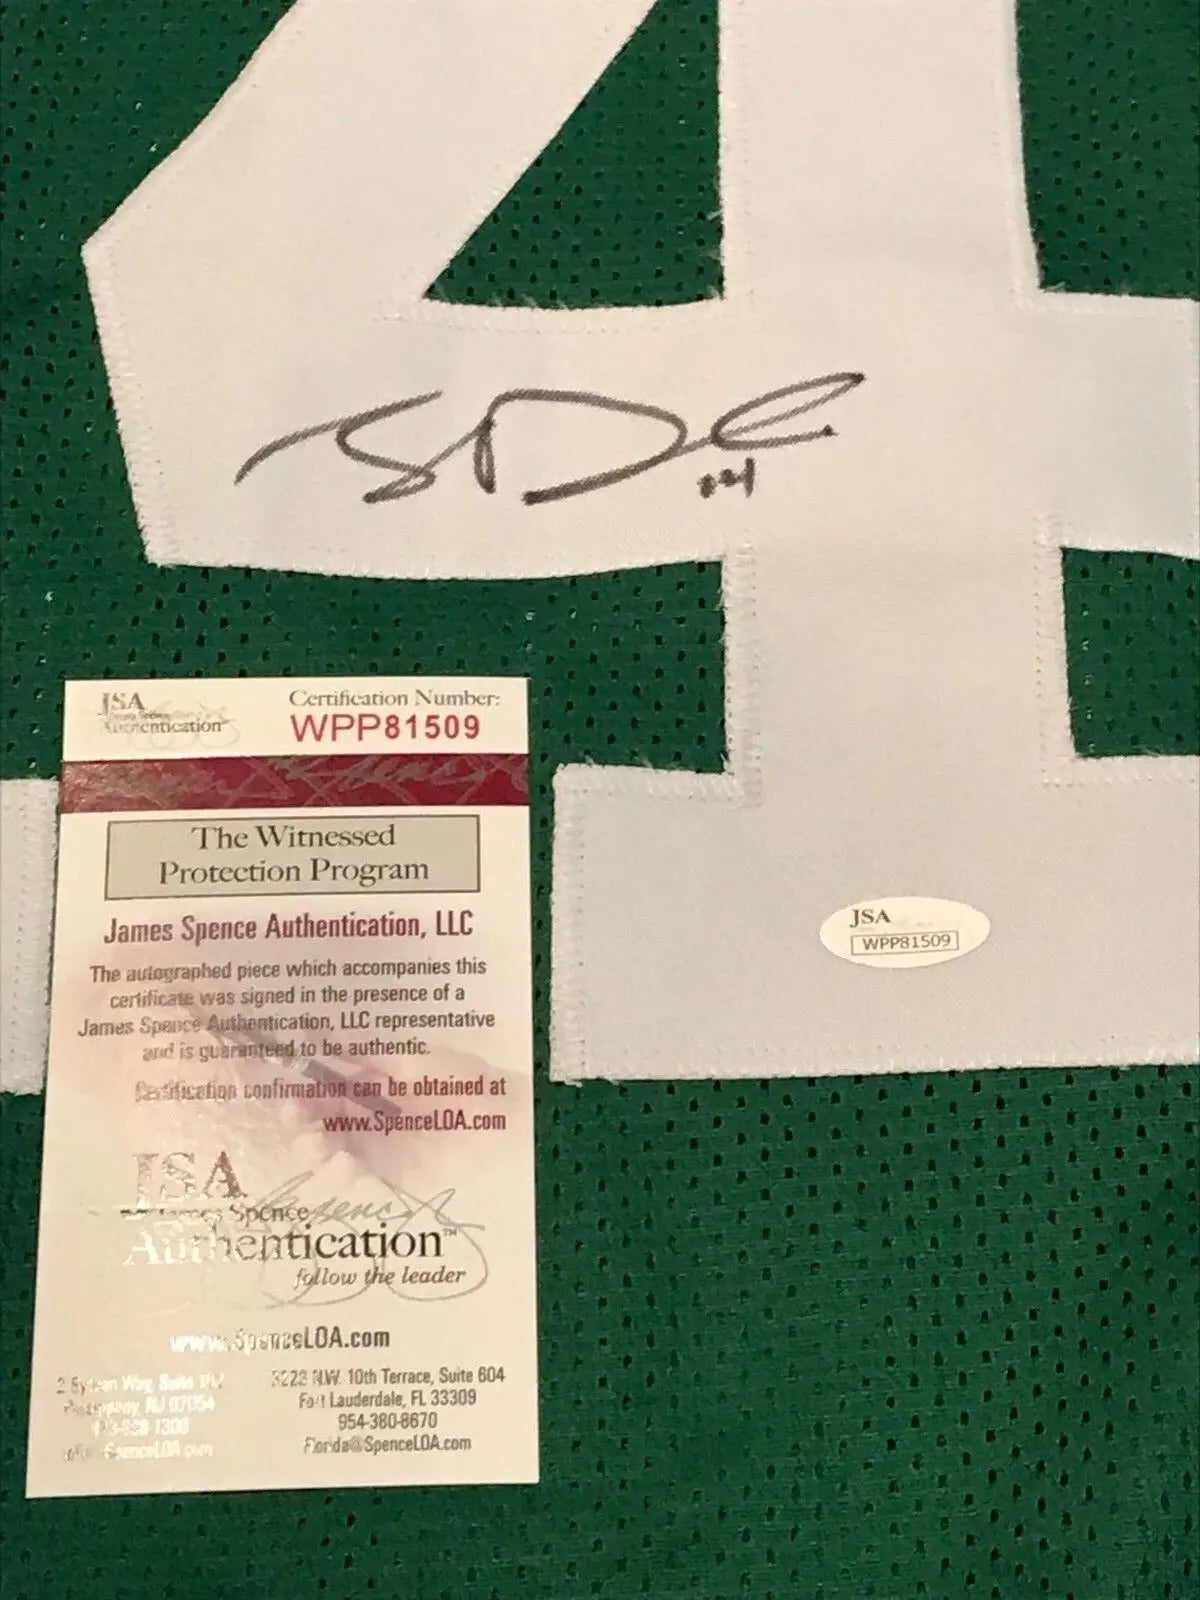 MVP Authentics N.Y. Jets Sam Darnold Autographed Signed Jersey Jsa Coa 188.10 sports jersey framing , jersey framing